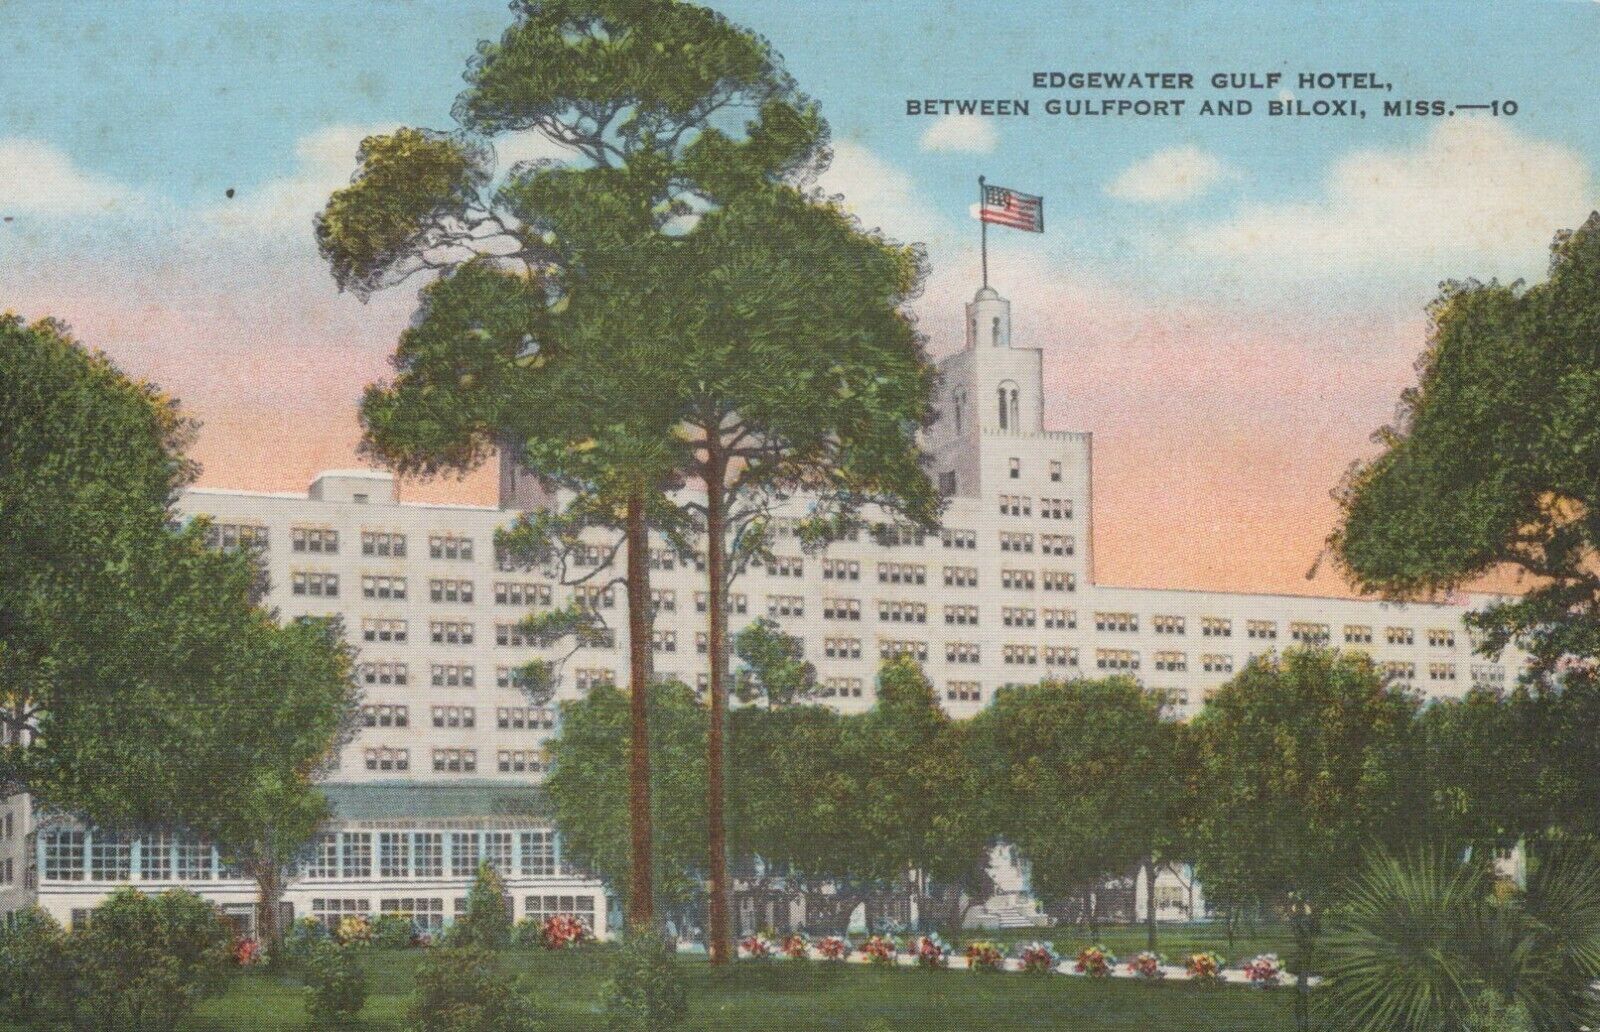 Edgewater Gulf Hotel Gulfport Biloxi Mississippi Vintage Linen Post Card 